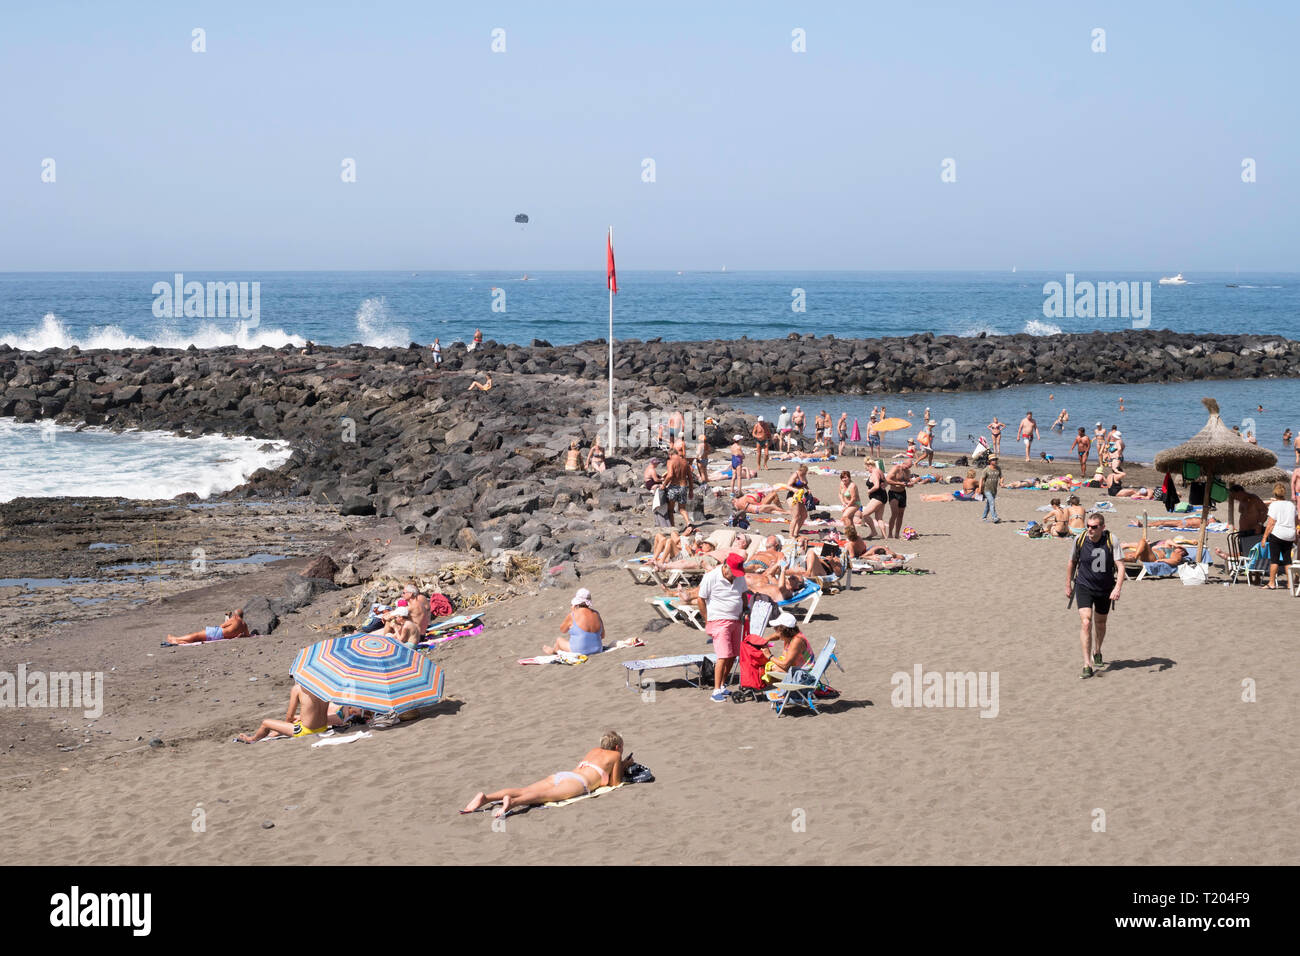 Les gens en train de bronzer sur la plage de Costa Adeje, Tenerife, Canaries. Banque D'Images